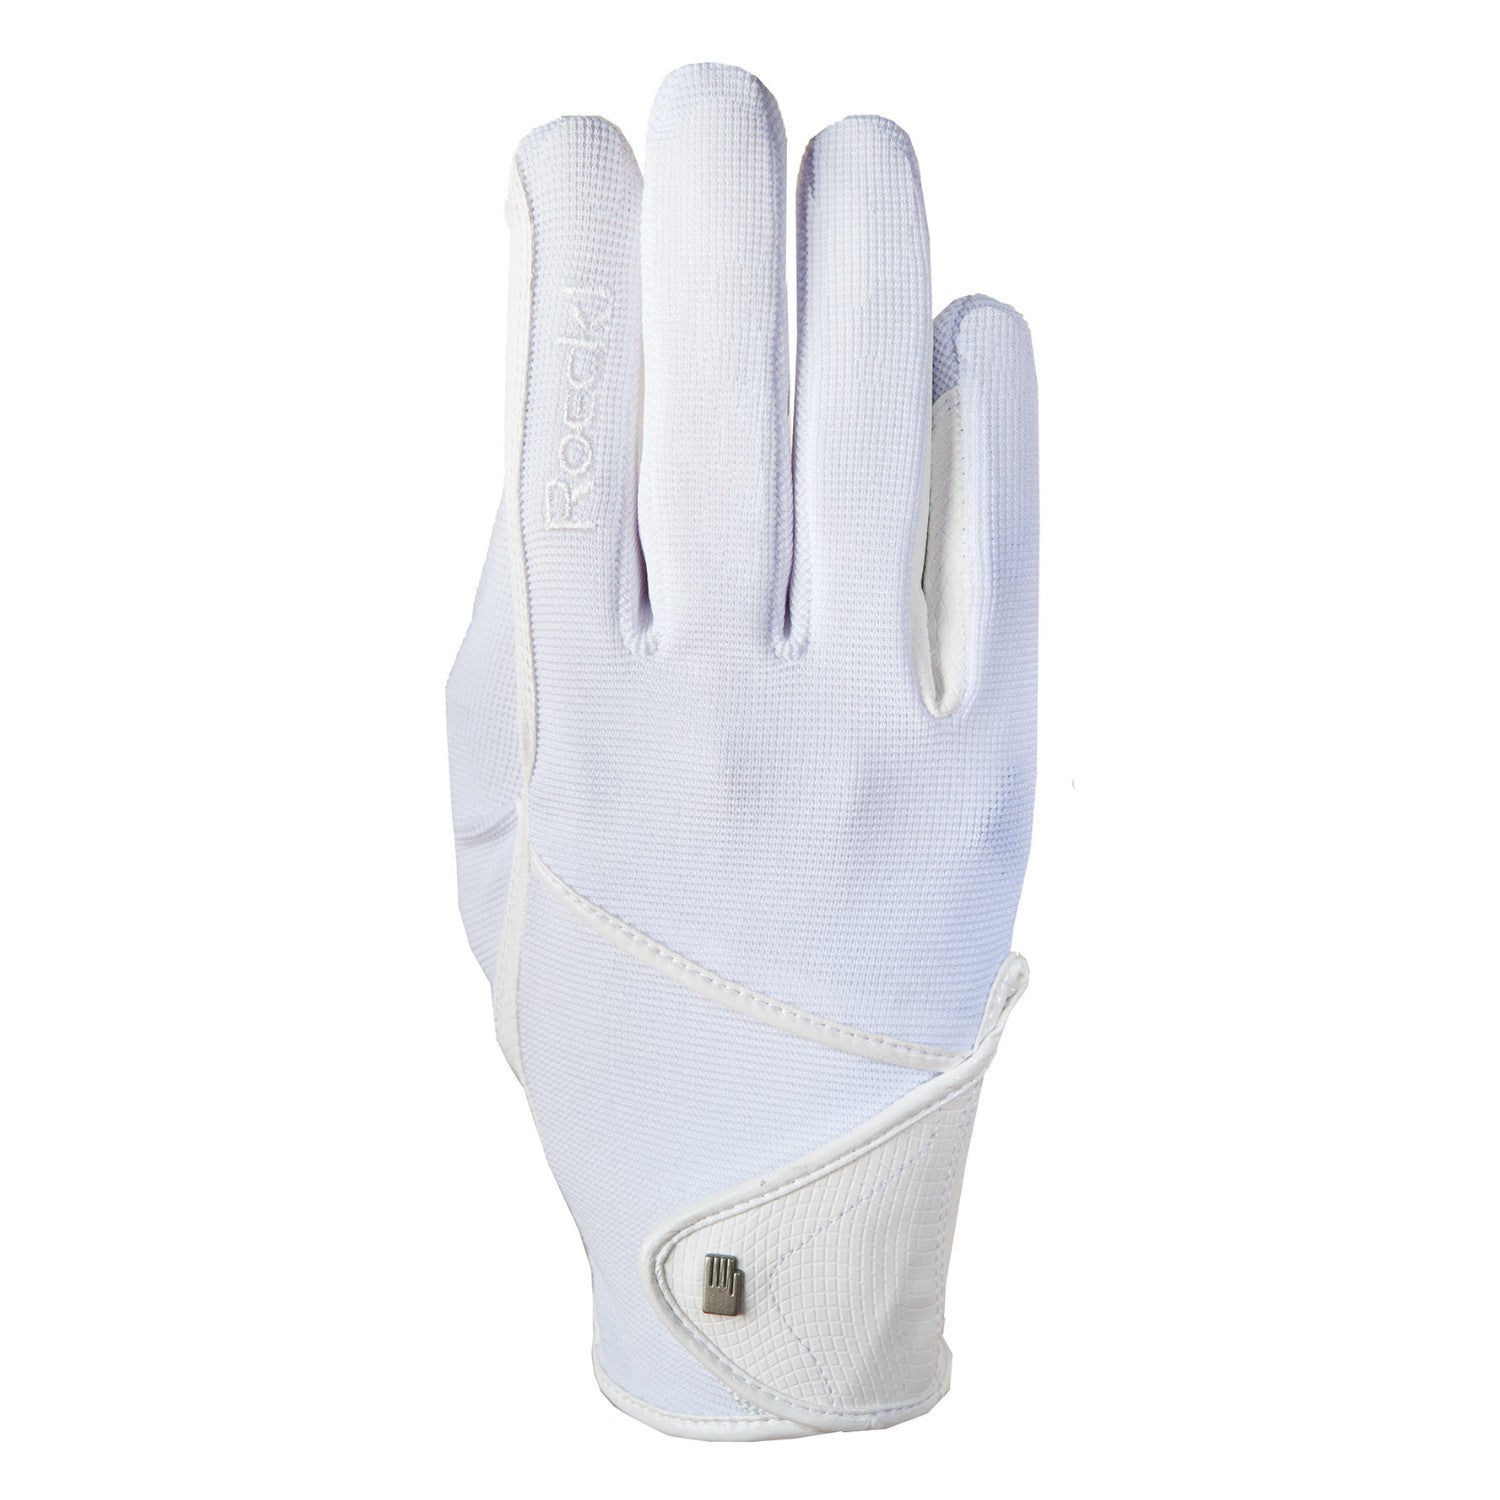 Roeckl Madison Gloves